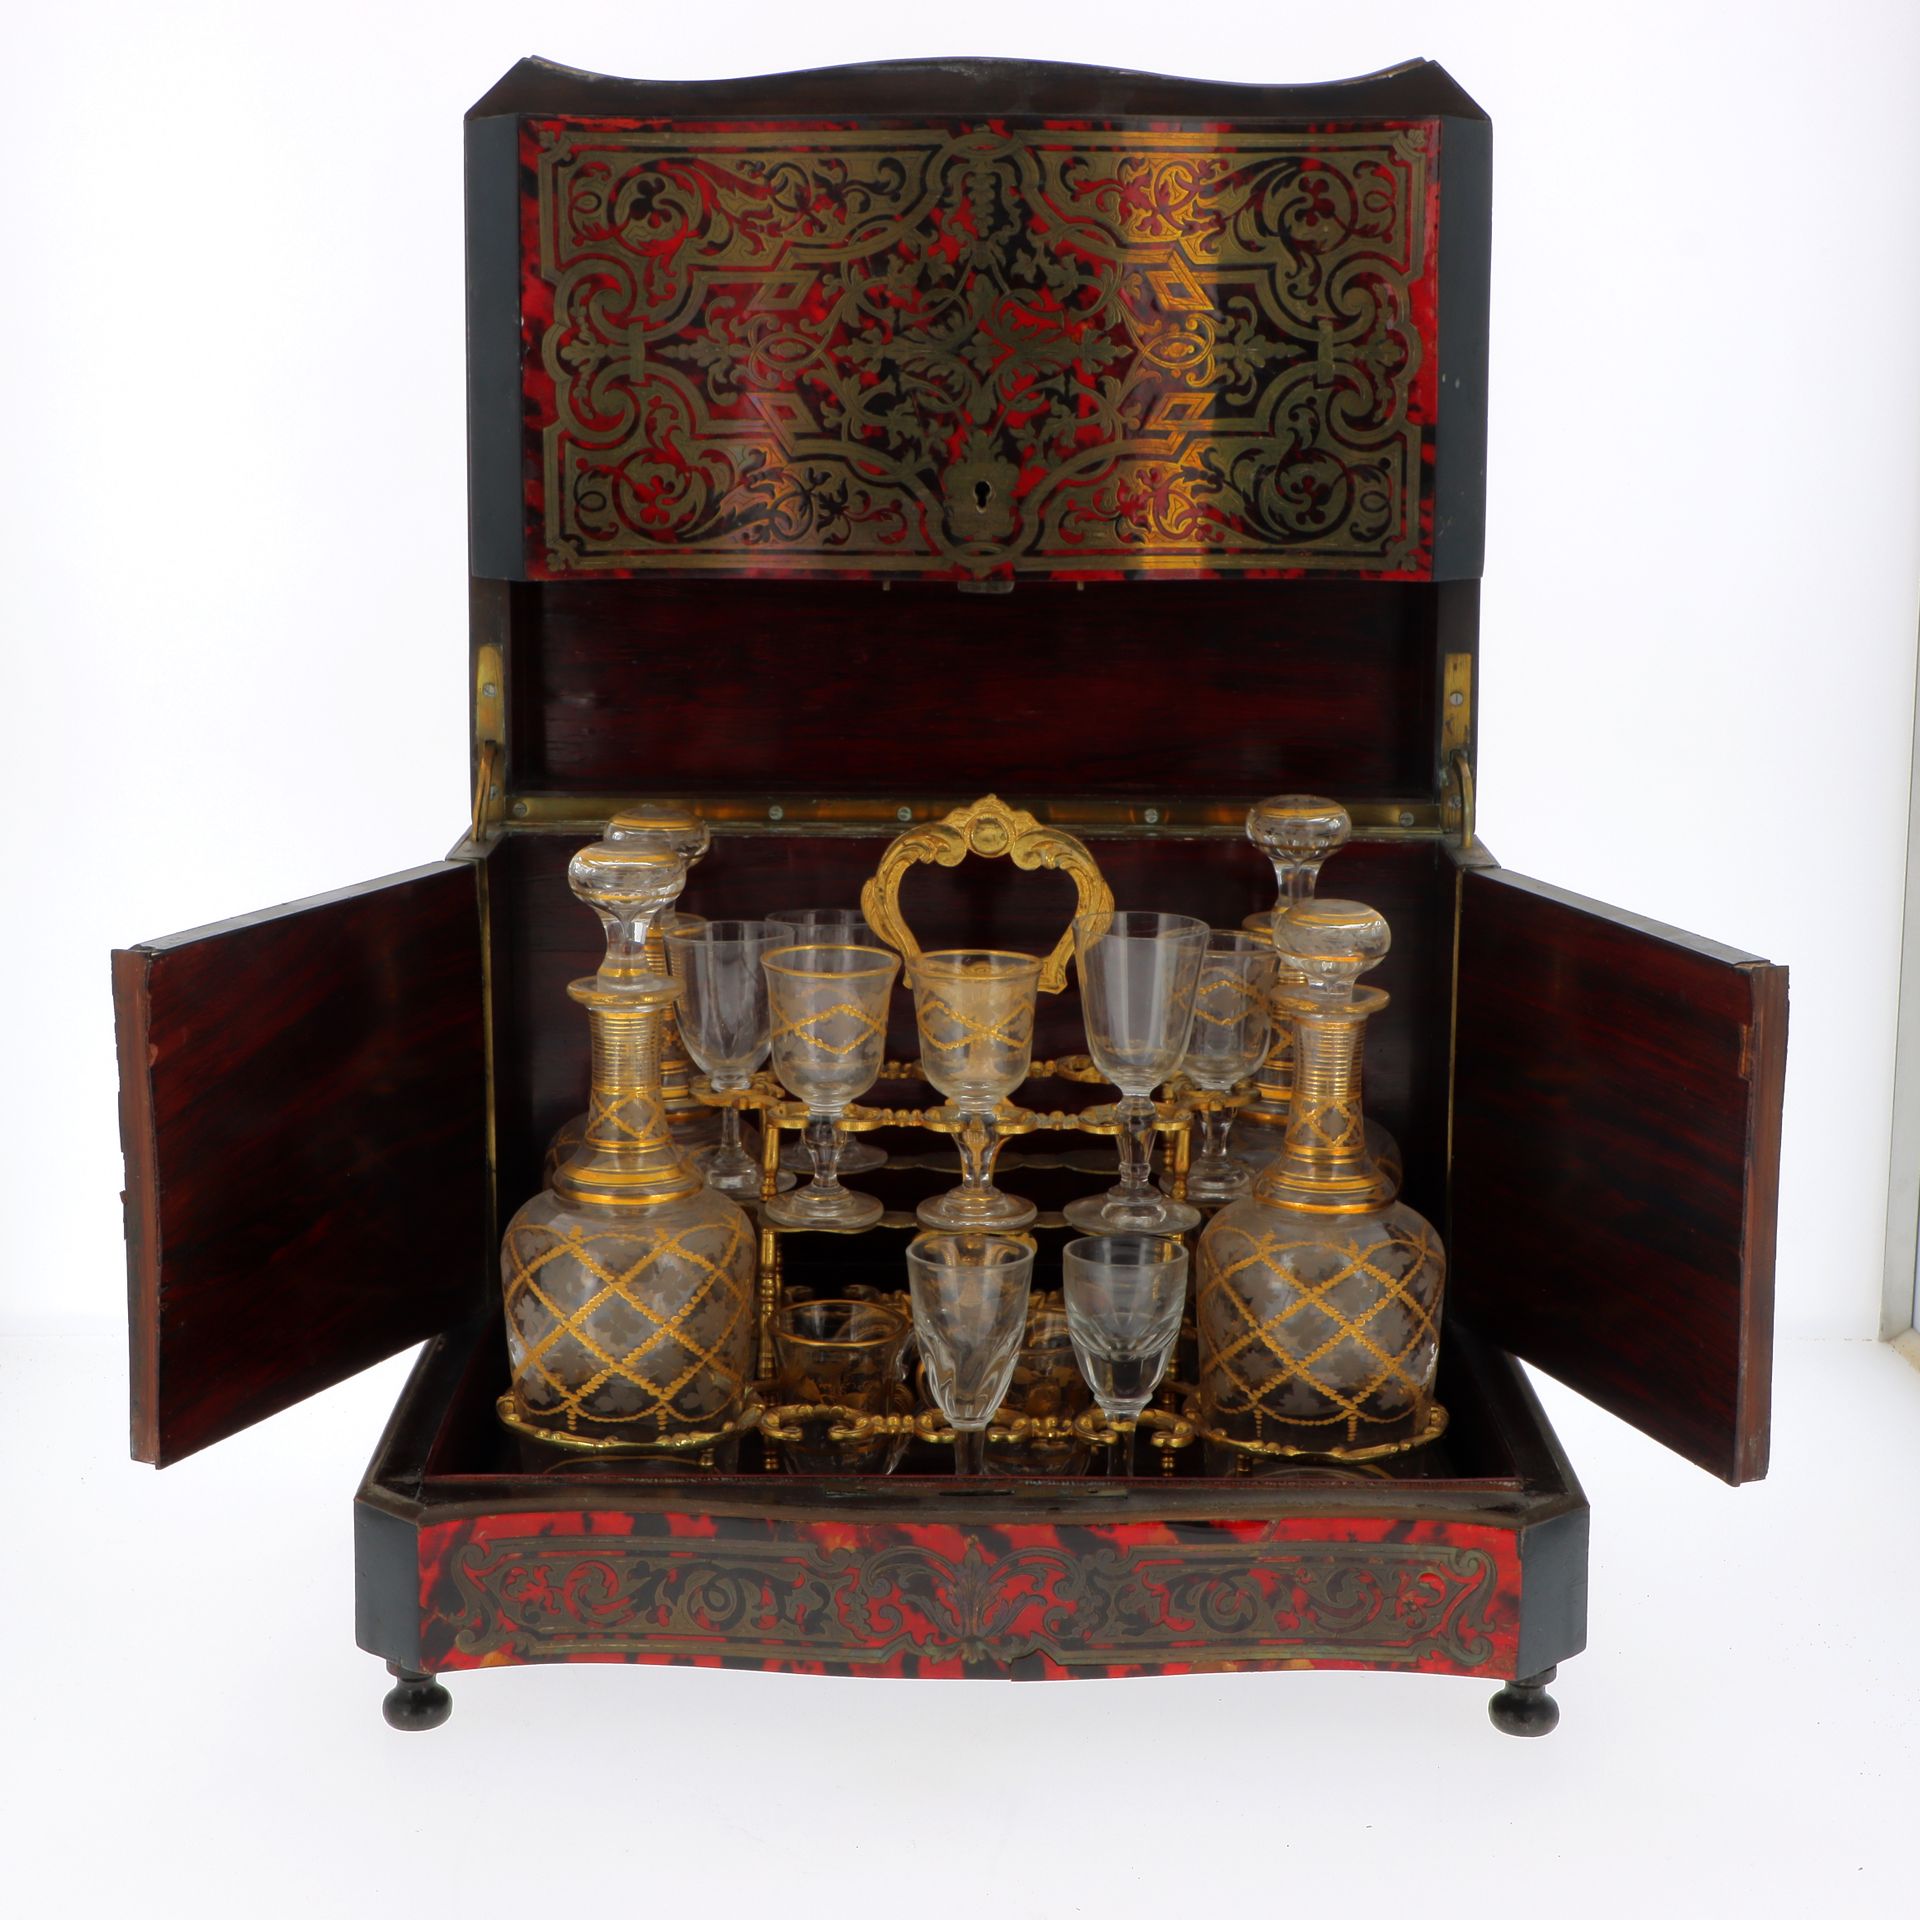 Null 酒柜
用发黑的木头和红色和铜鳞的镶嵌工艺，其内部是水晶。
约1850年
失误和事故